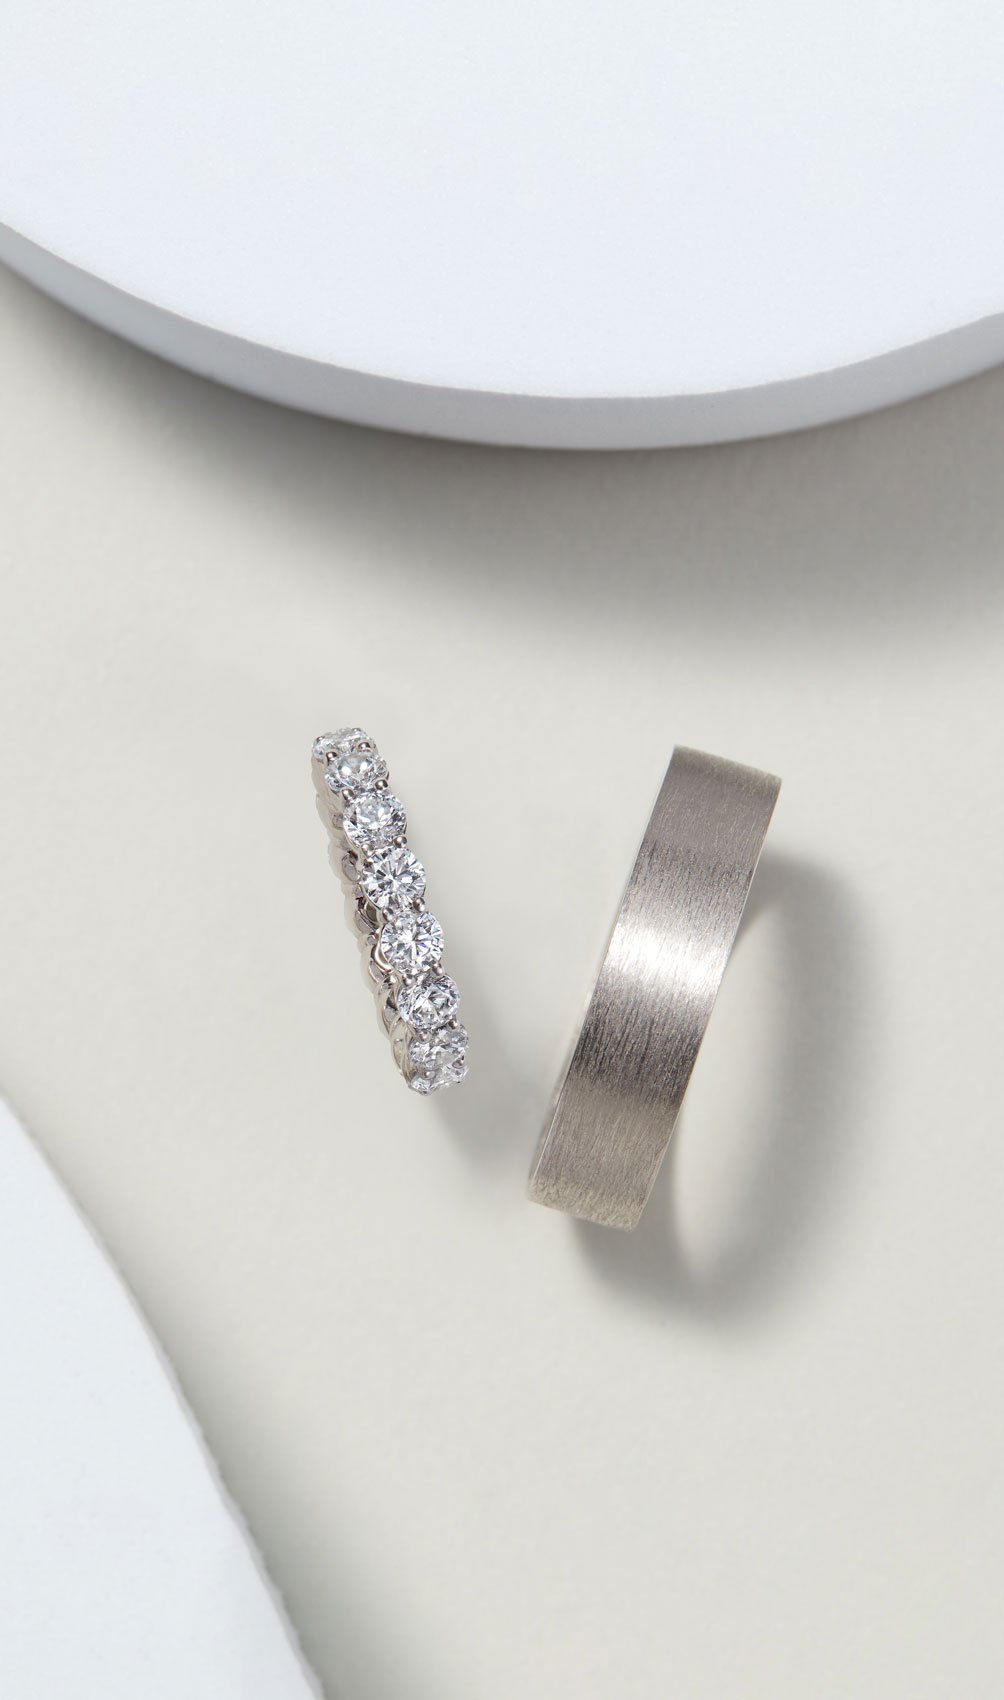 Buy premium diamond ring online - Tales of Diamond